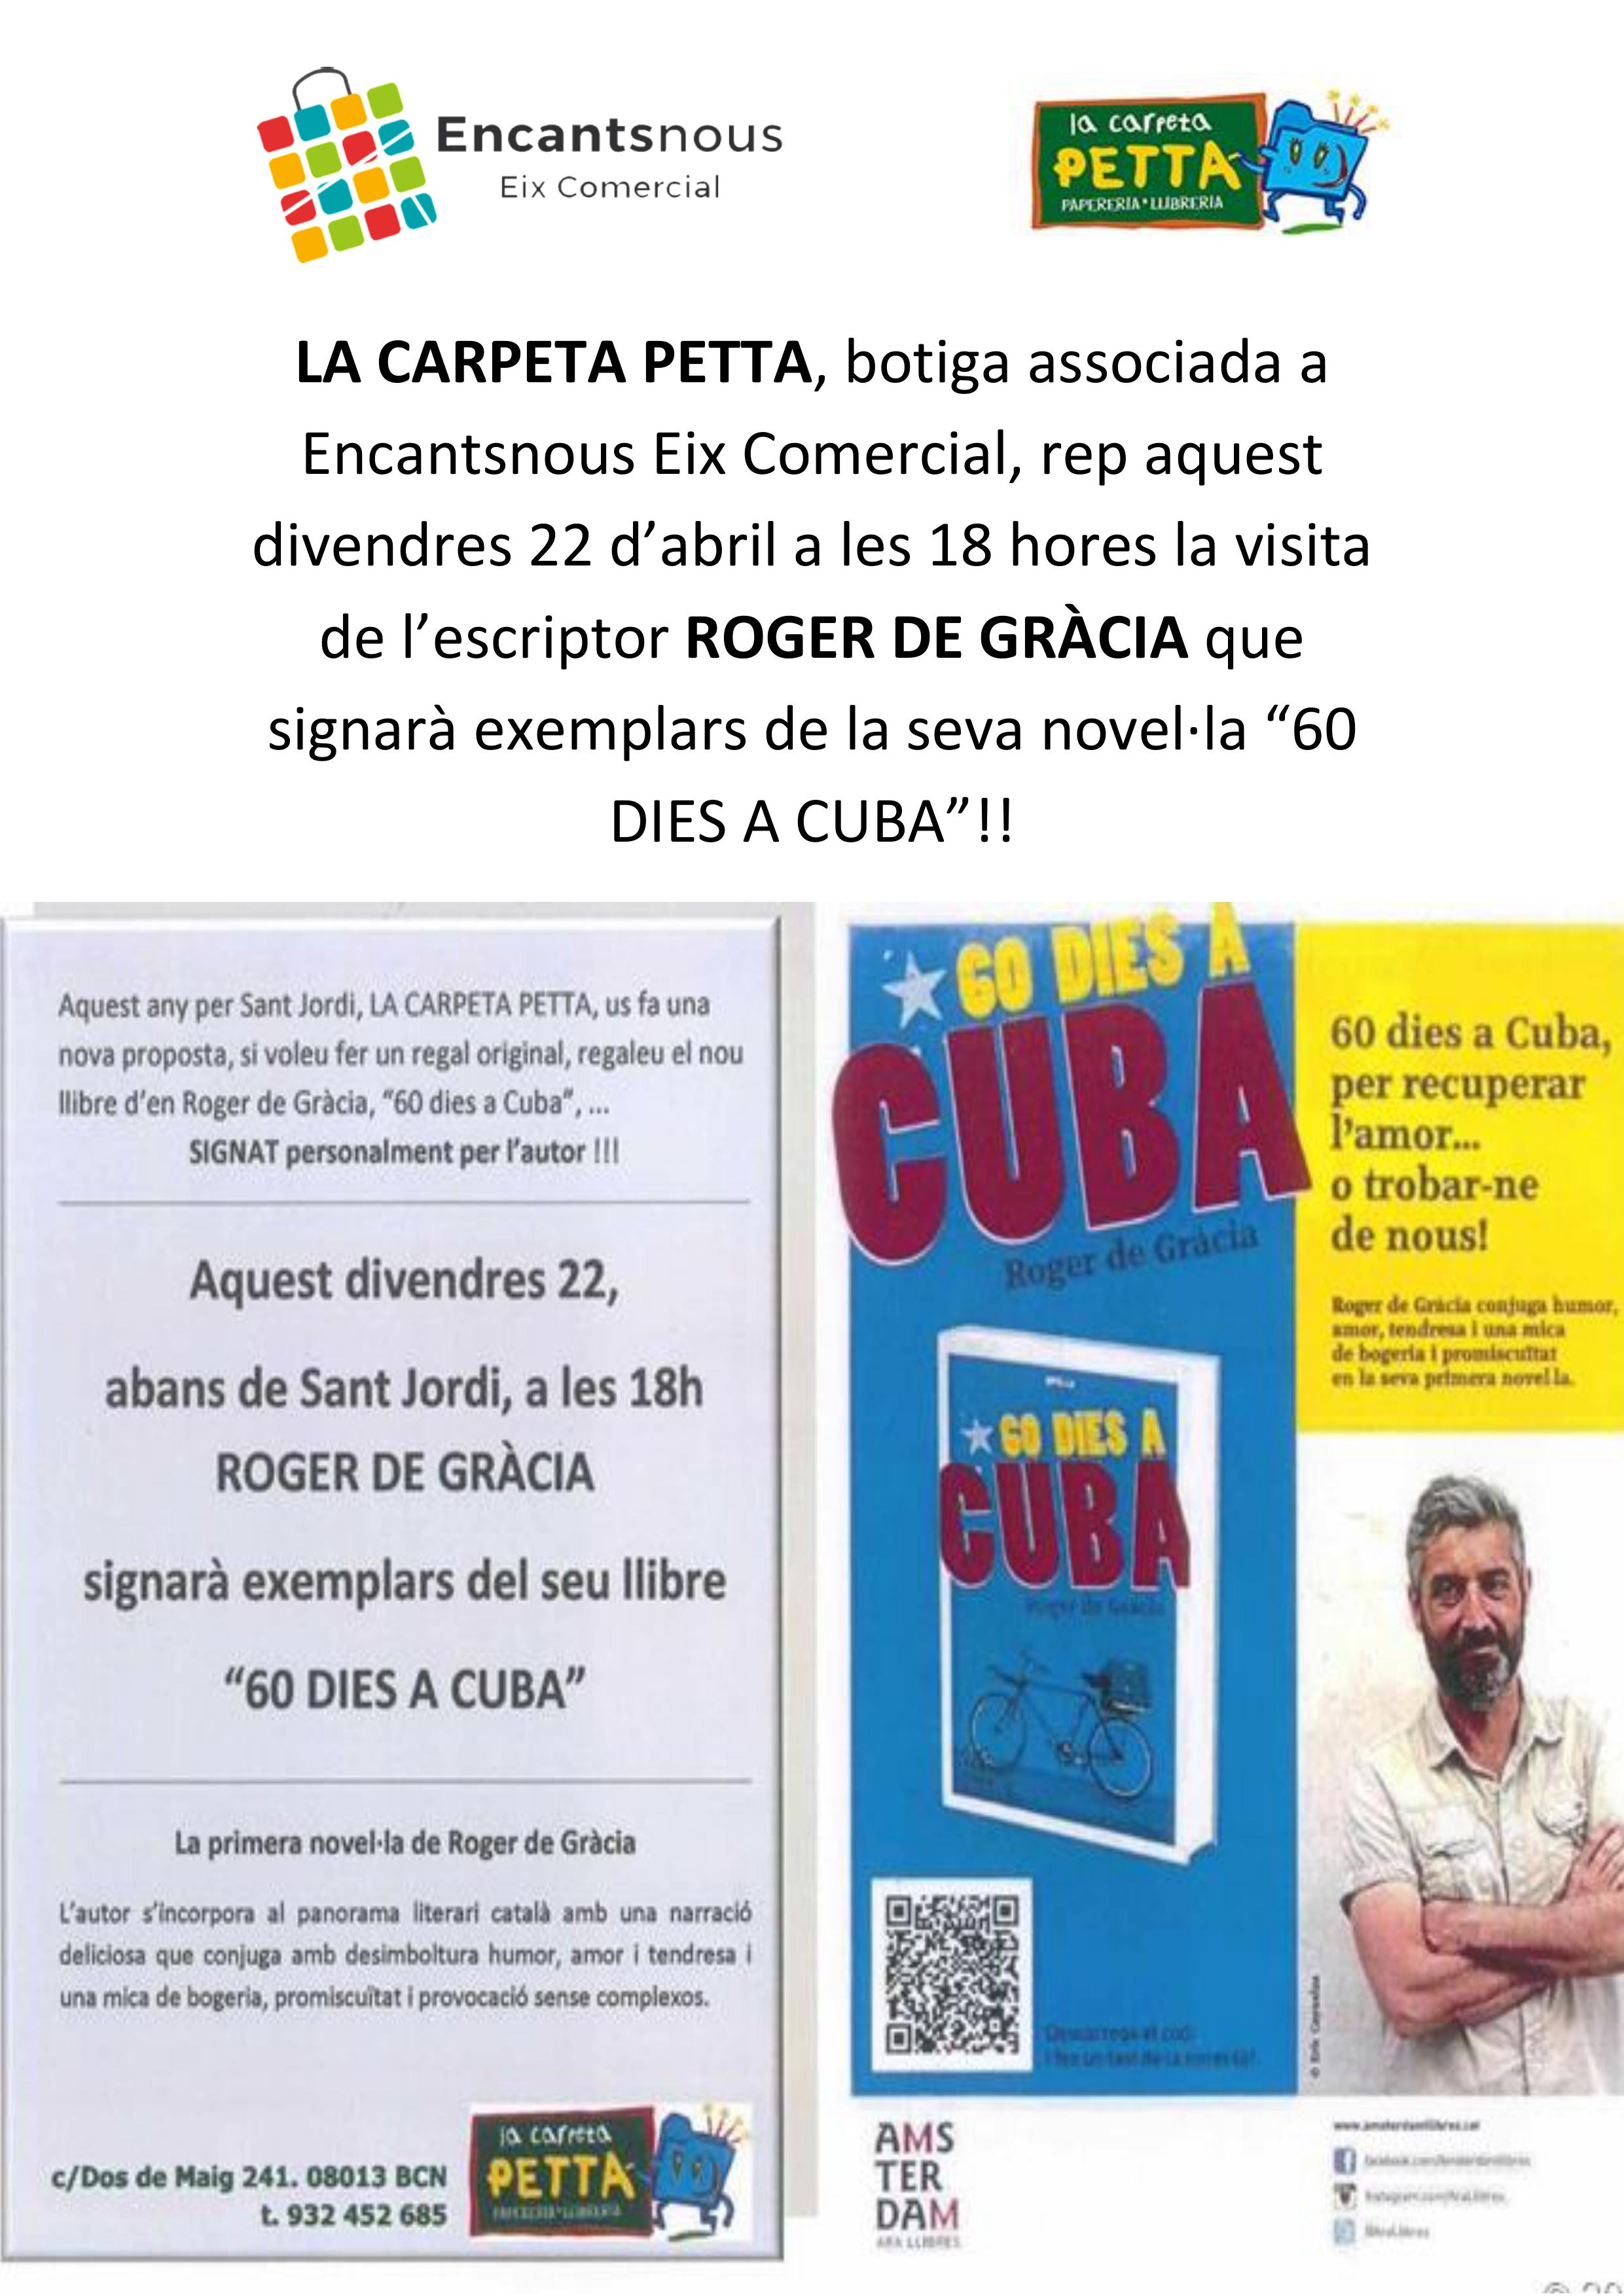 La Carpeta Petta recibe el próximo viernes 22 de abril al escritor Roger de Gràcia